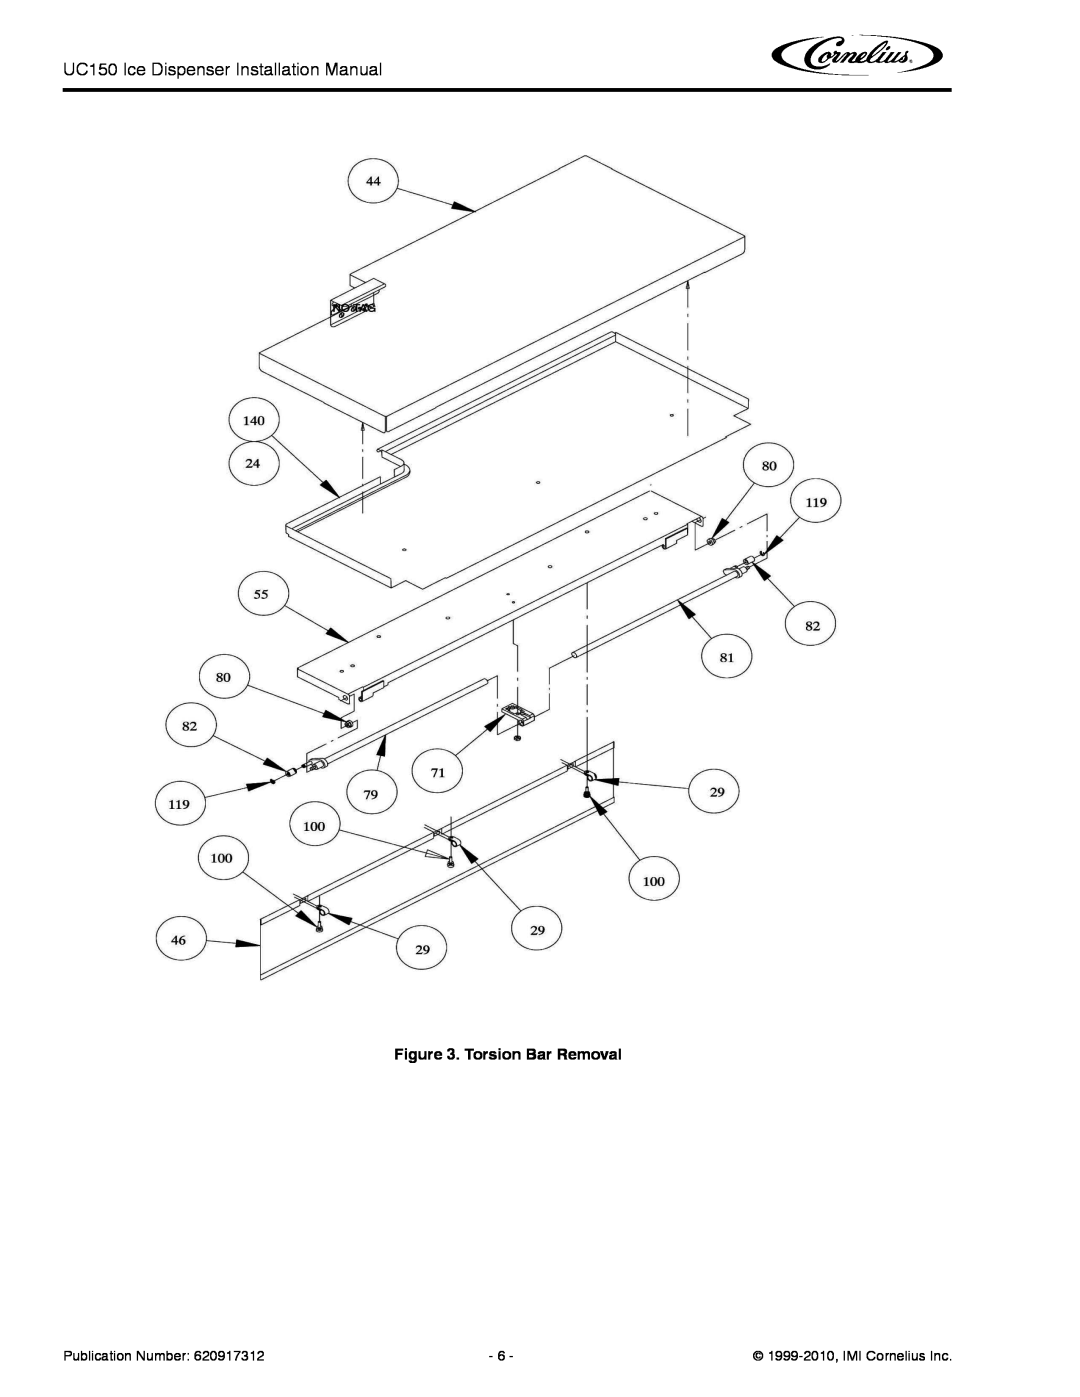 Cornelius UC 150 installation manual Torsion Bar Removal, Publication Number, 1999-2010,IMI Cornelius Inc 